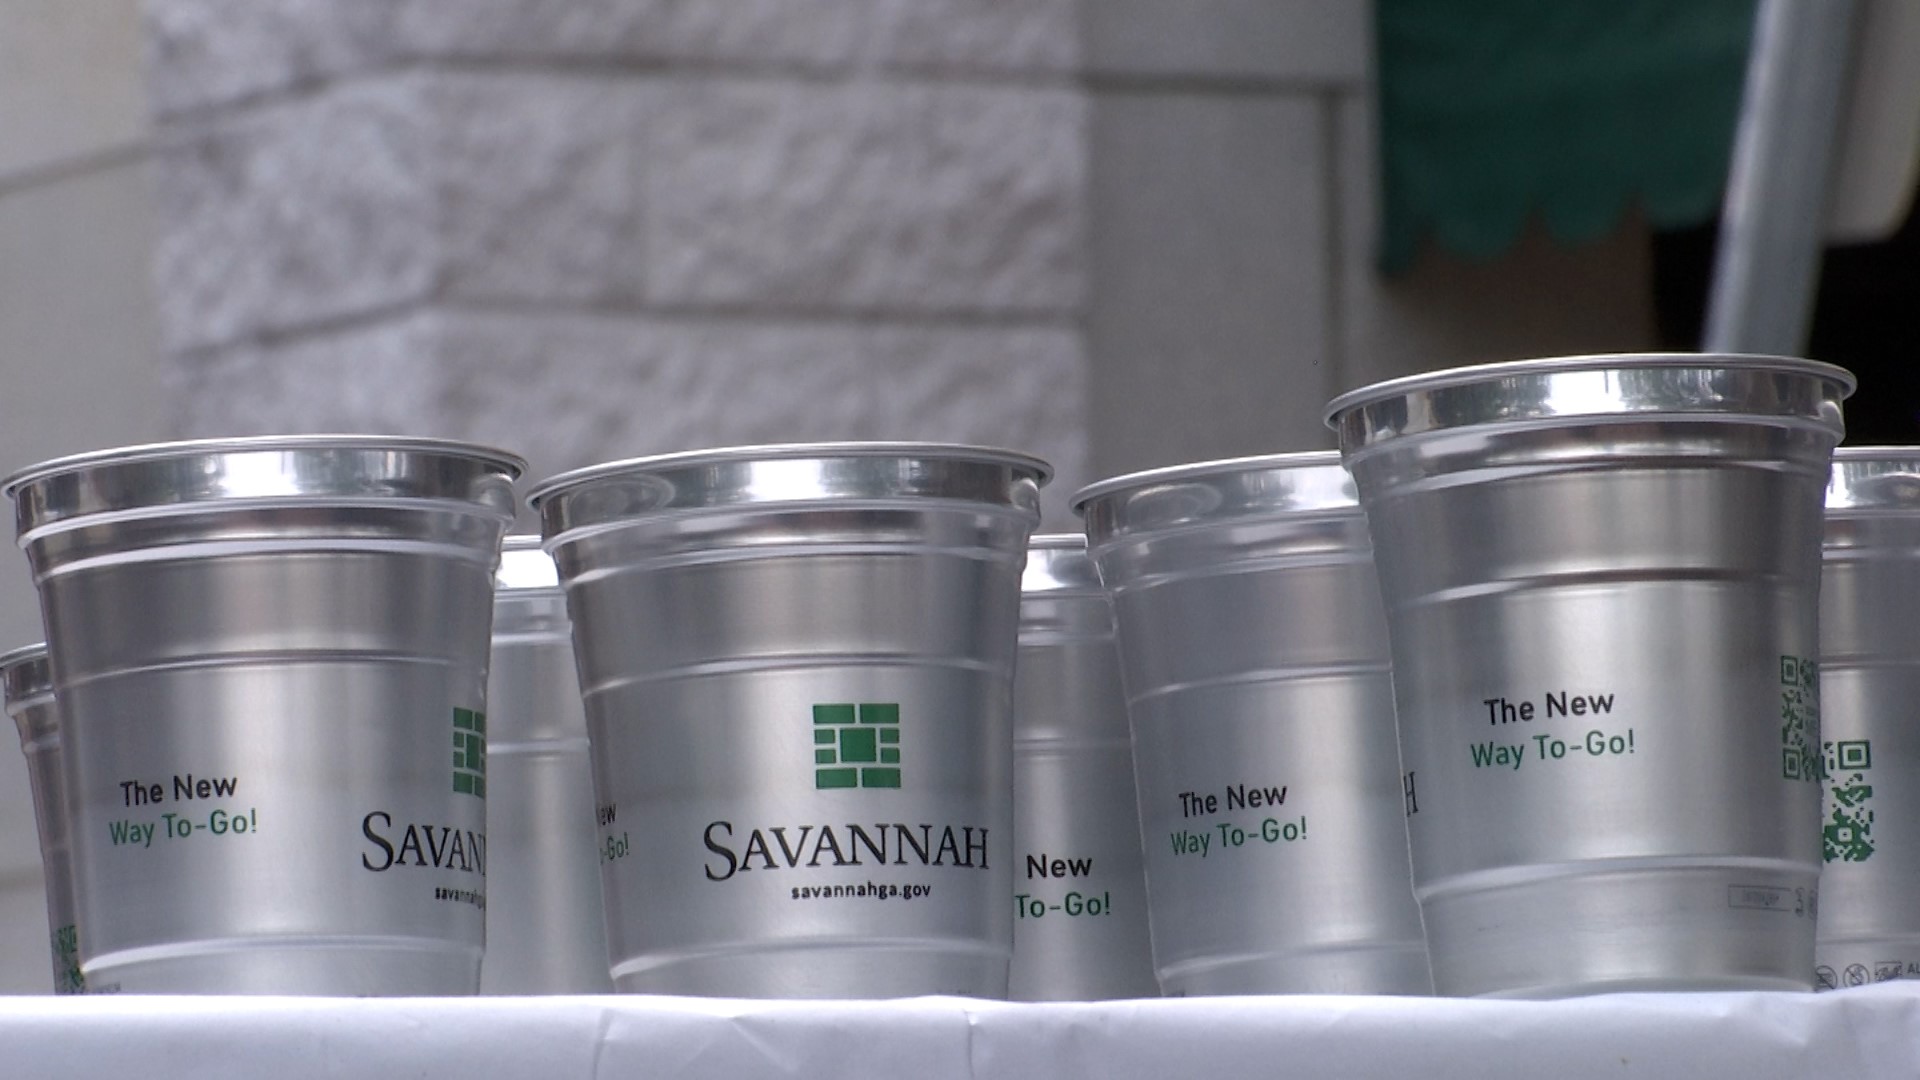 Savannah business association ideates redesigning aluminium cups into sustainable souvenirs